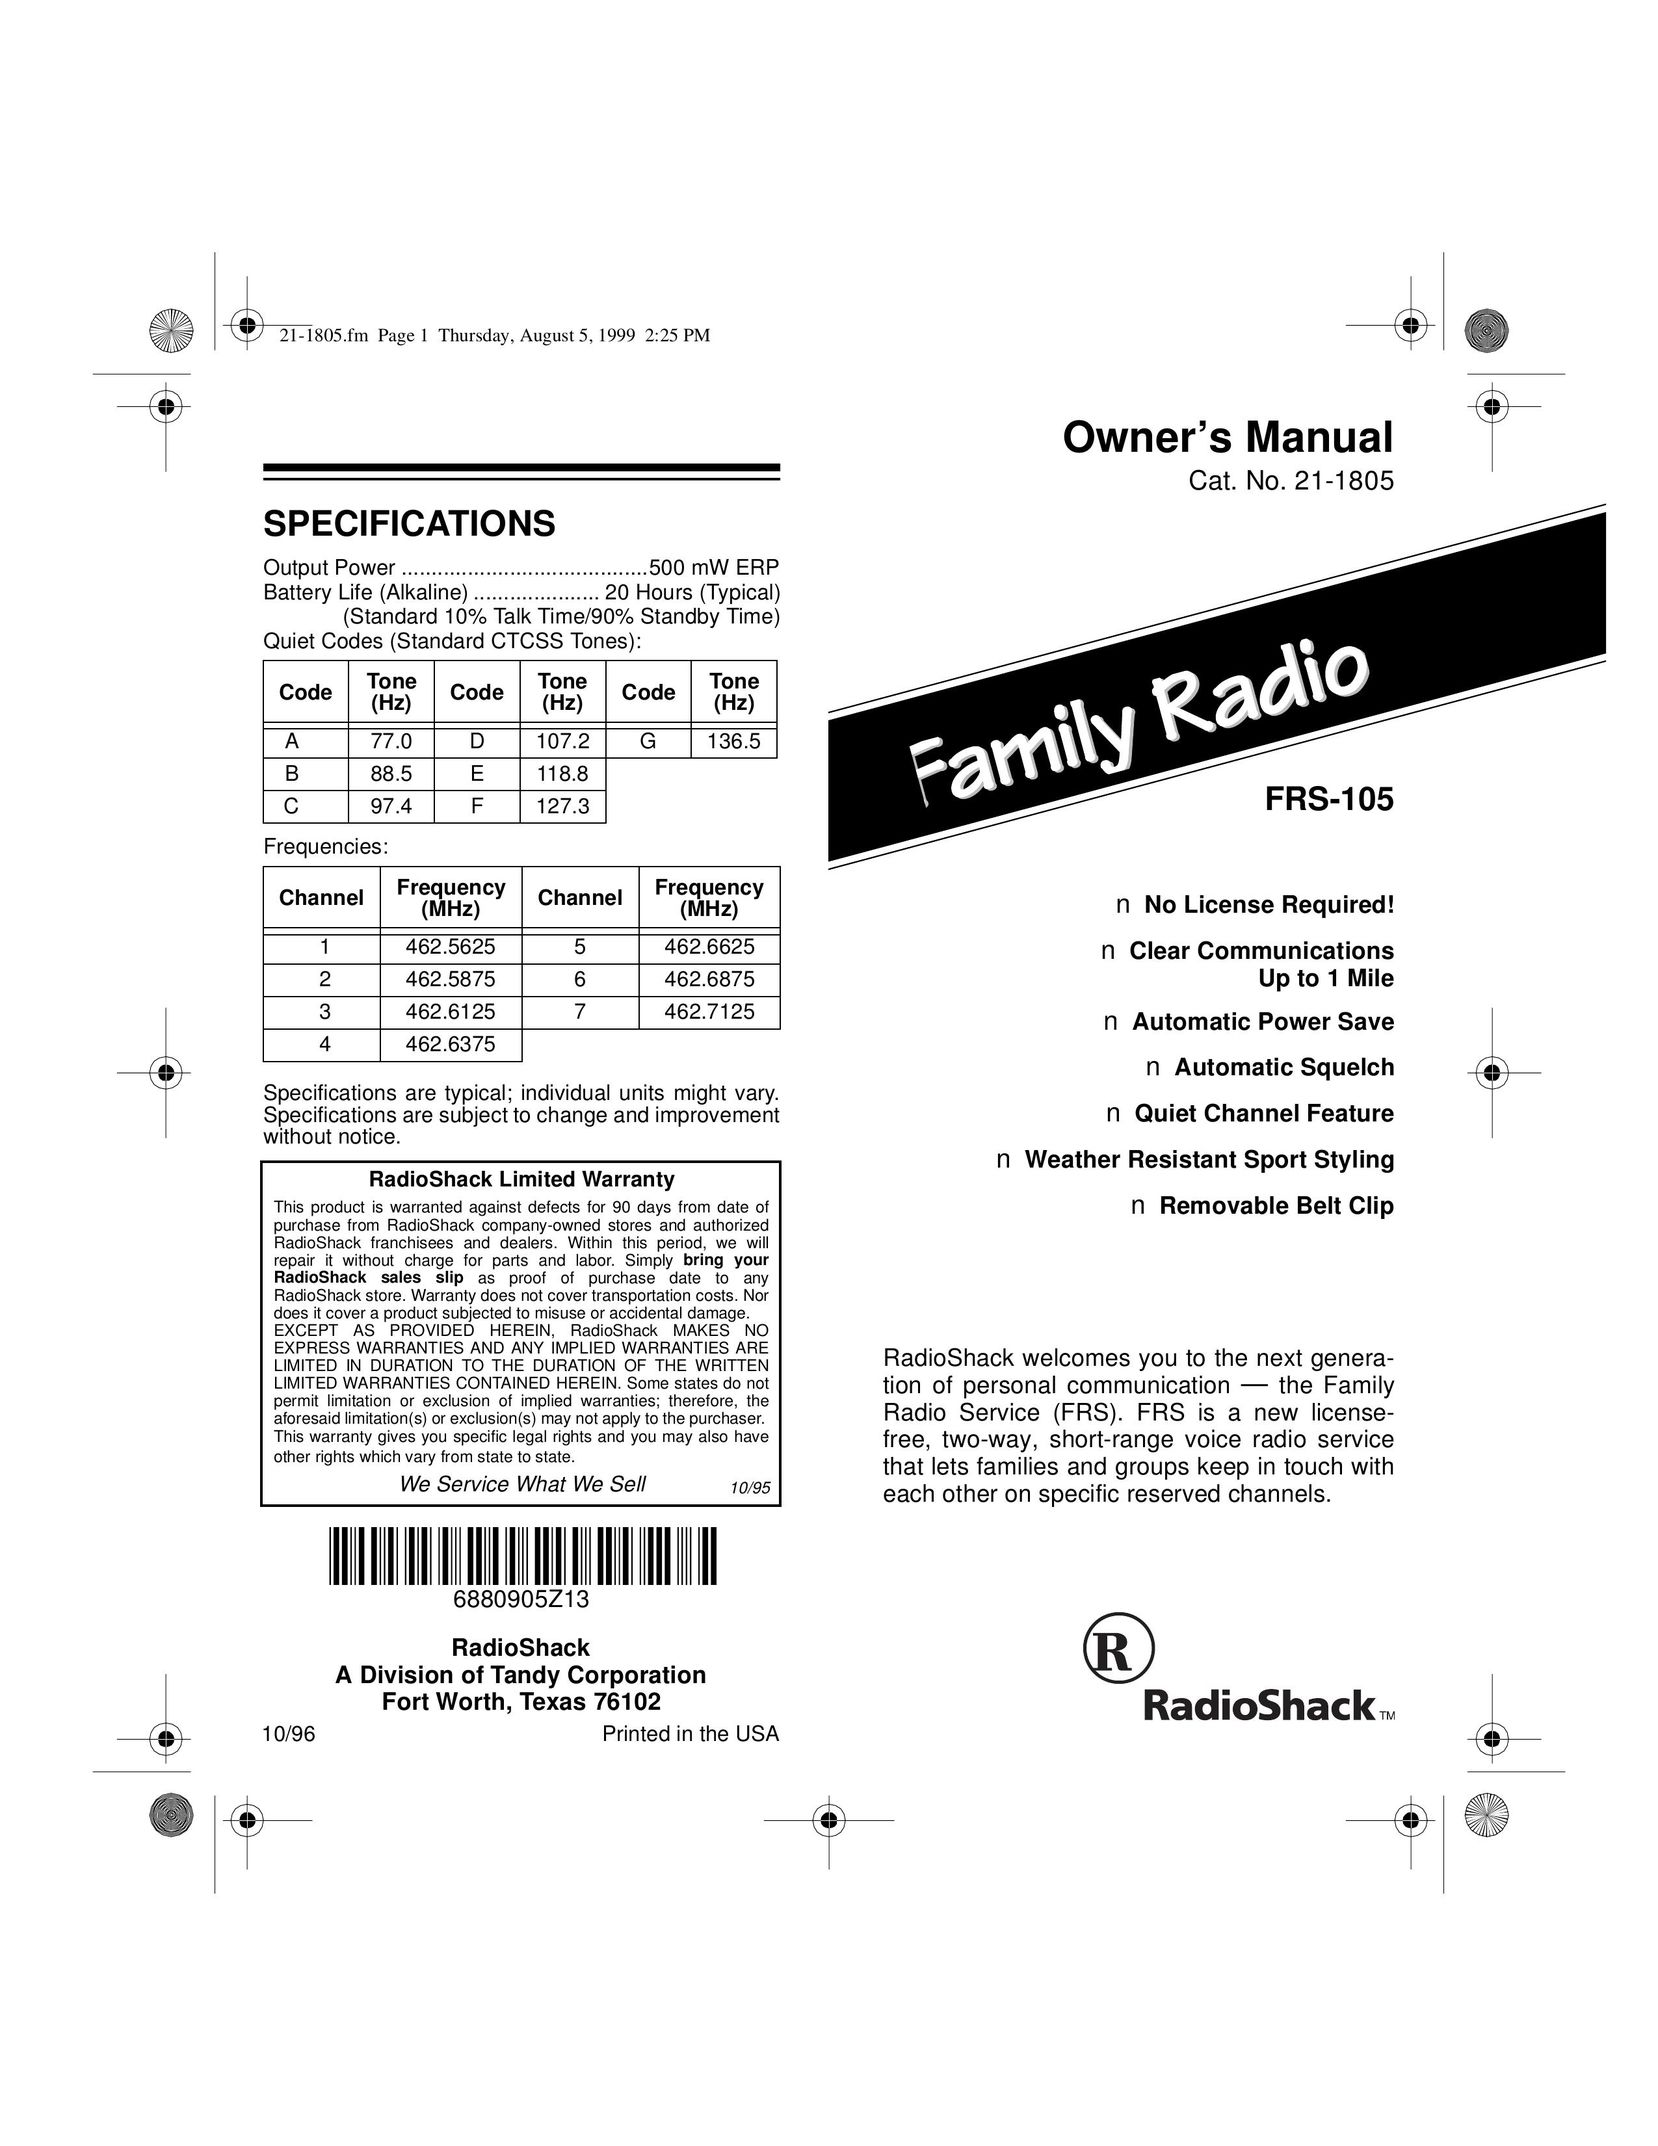 Radio Shack FRS-105 Portable Radio User Manual